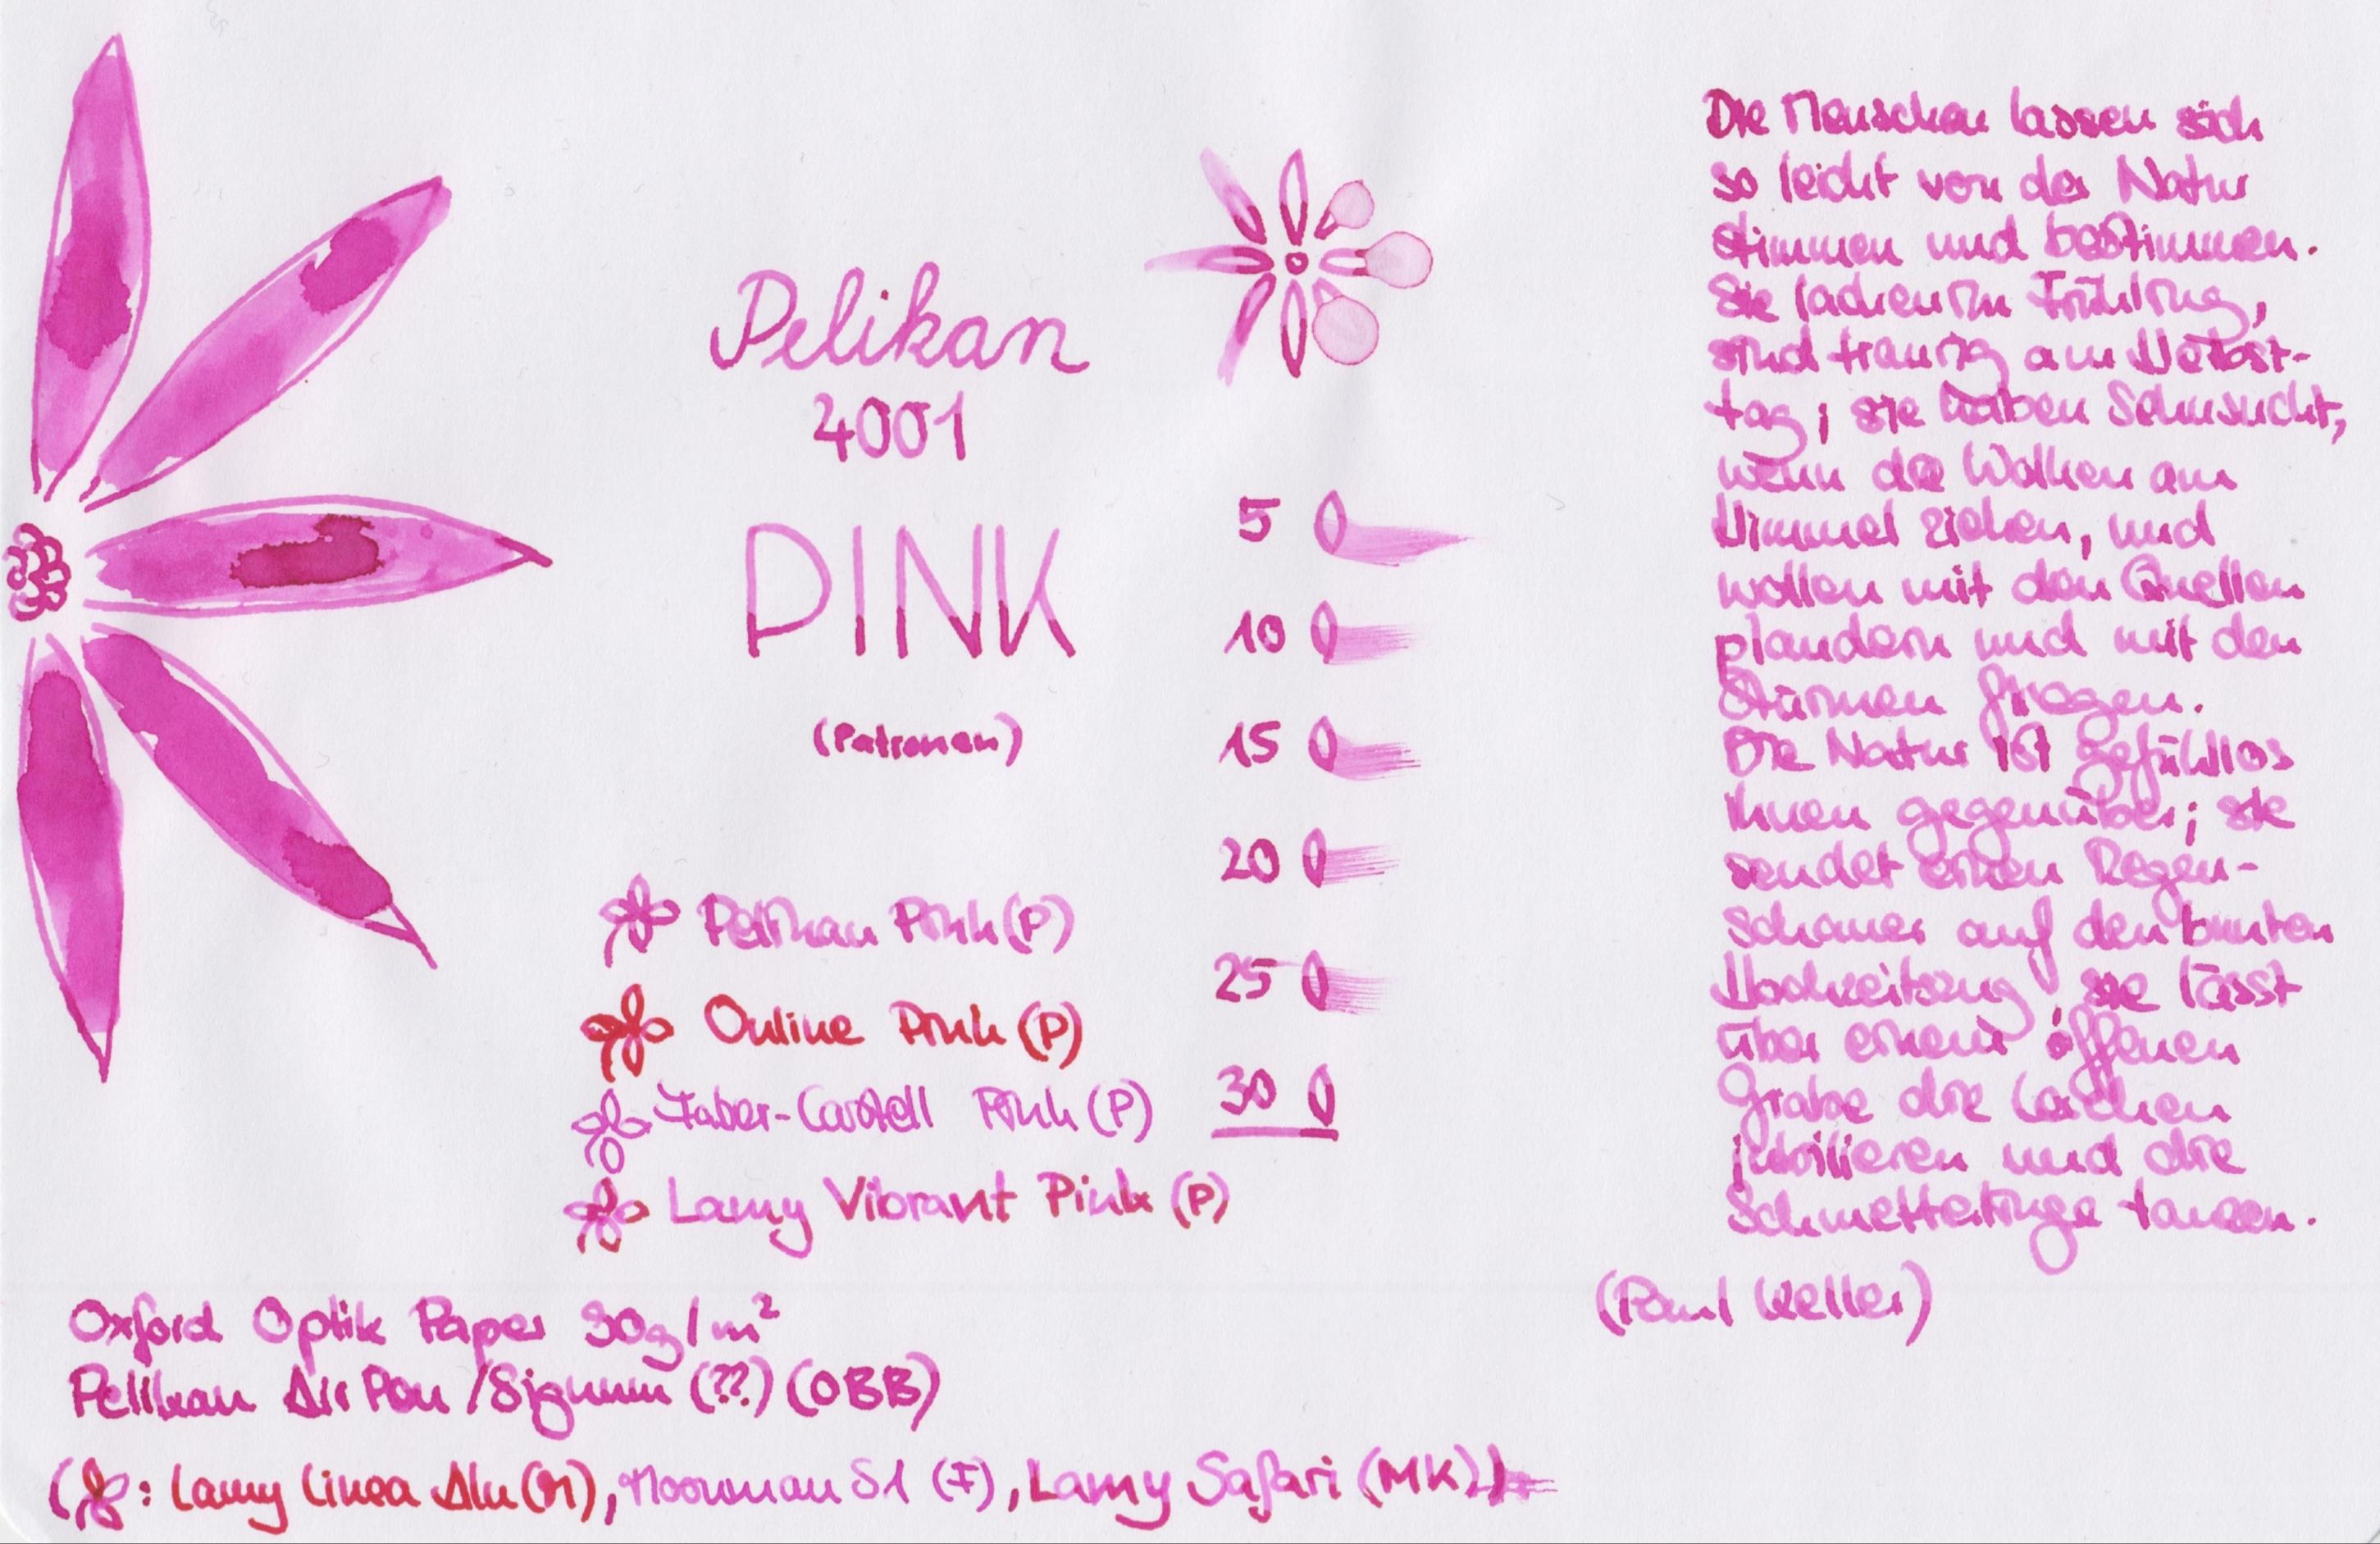 Pelikan 4001 Pink P Scan_compr.jpg